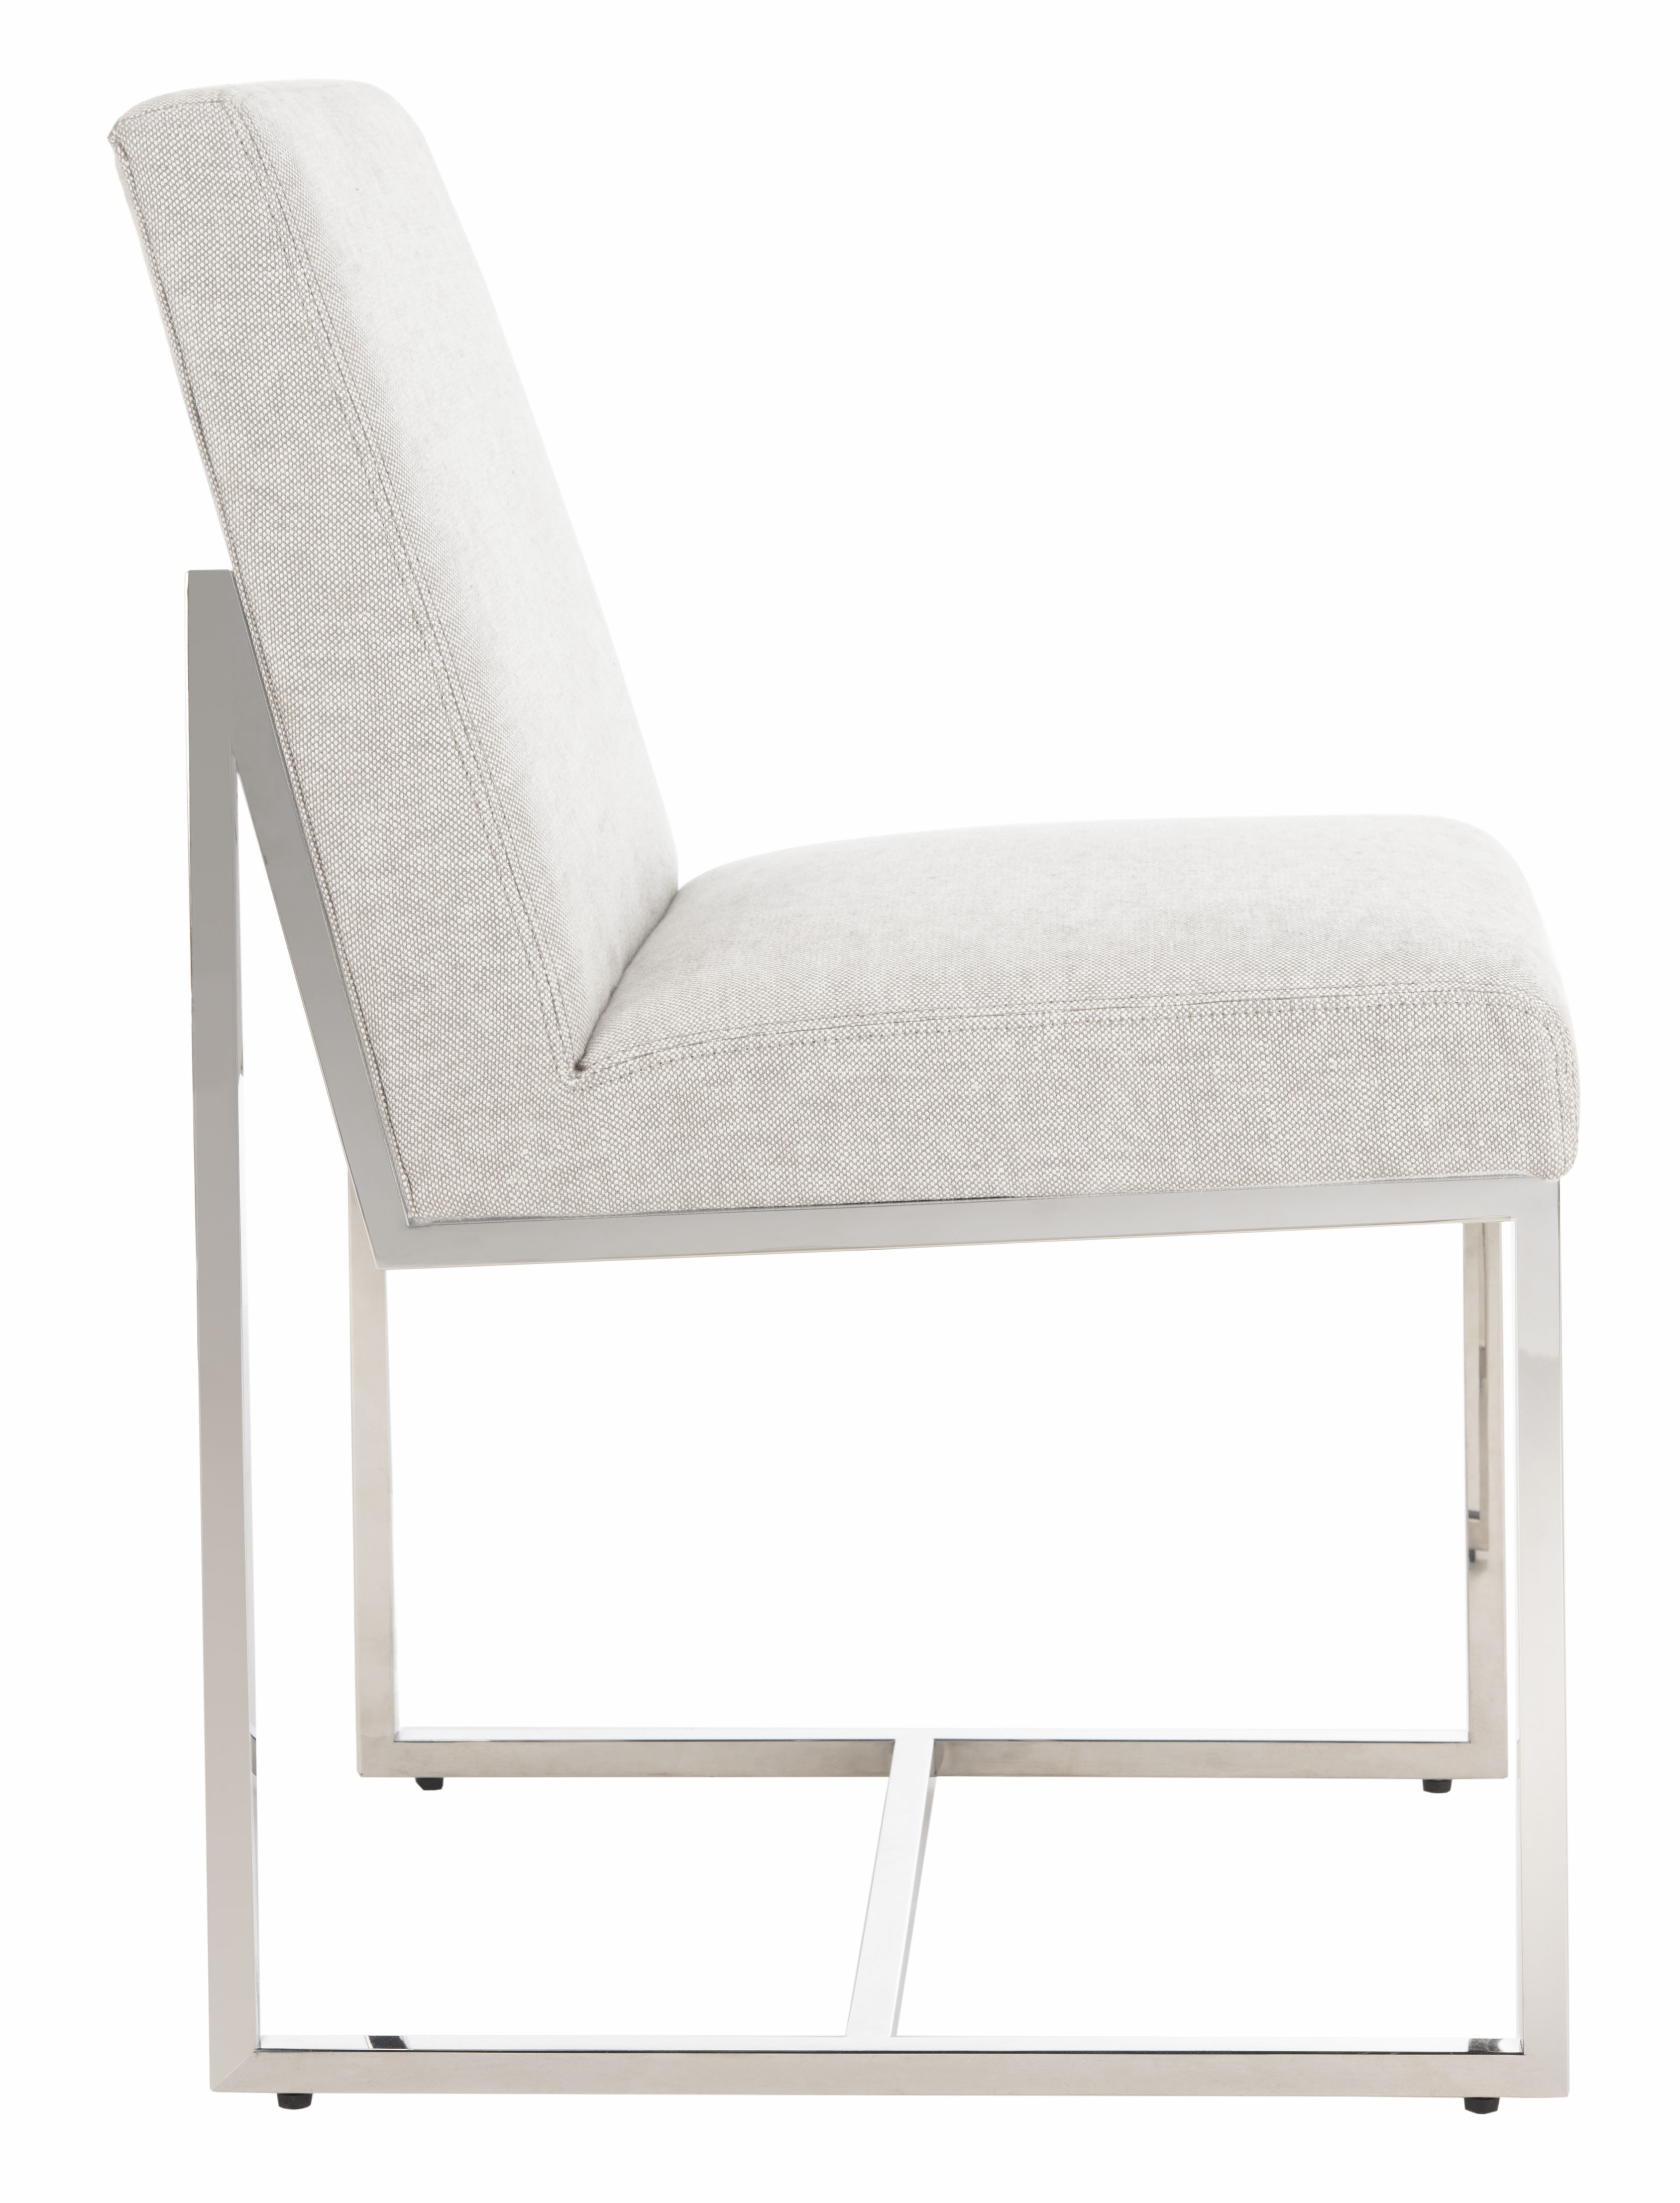 Lombardi Chrome Side Chair - Grey / White - Arlo Home - Image 2